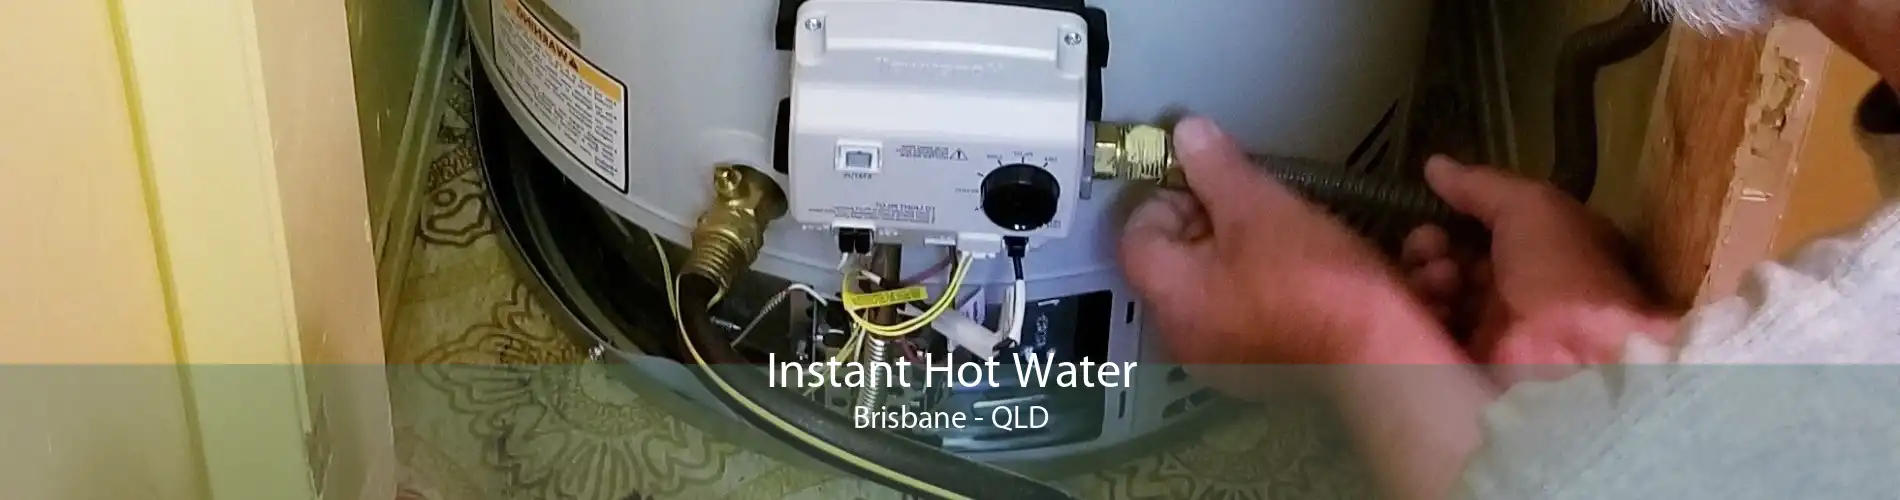 Instant Hot Water Brisbane - QLD